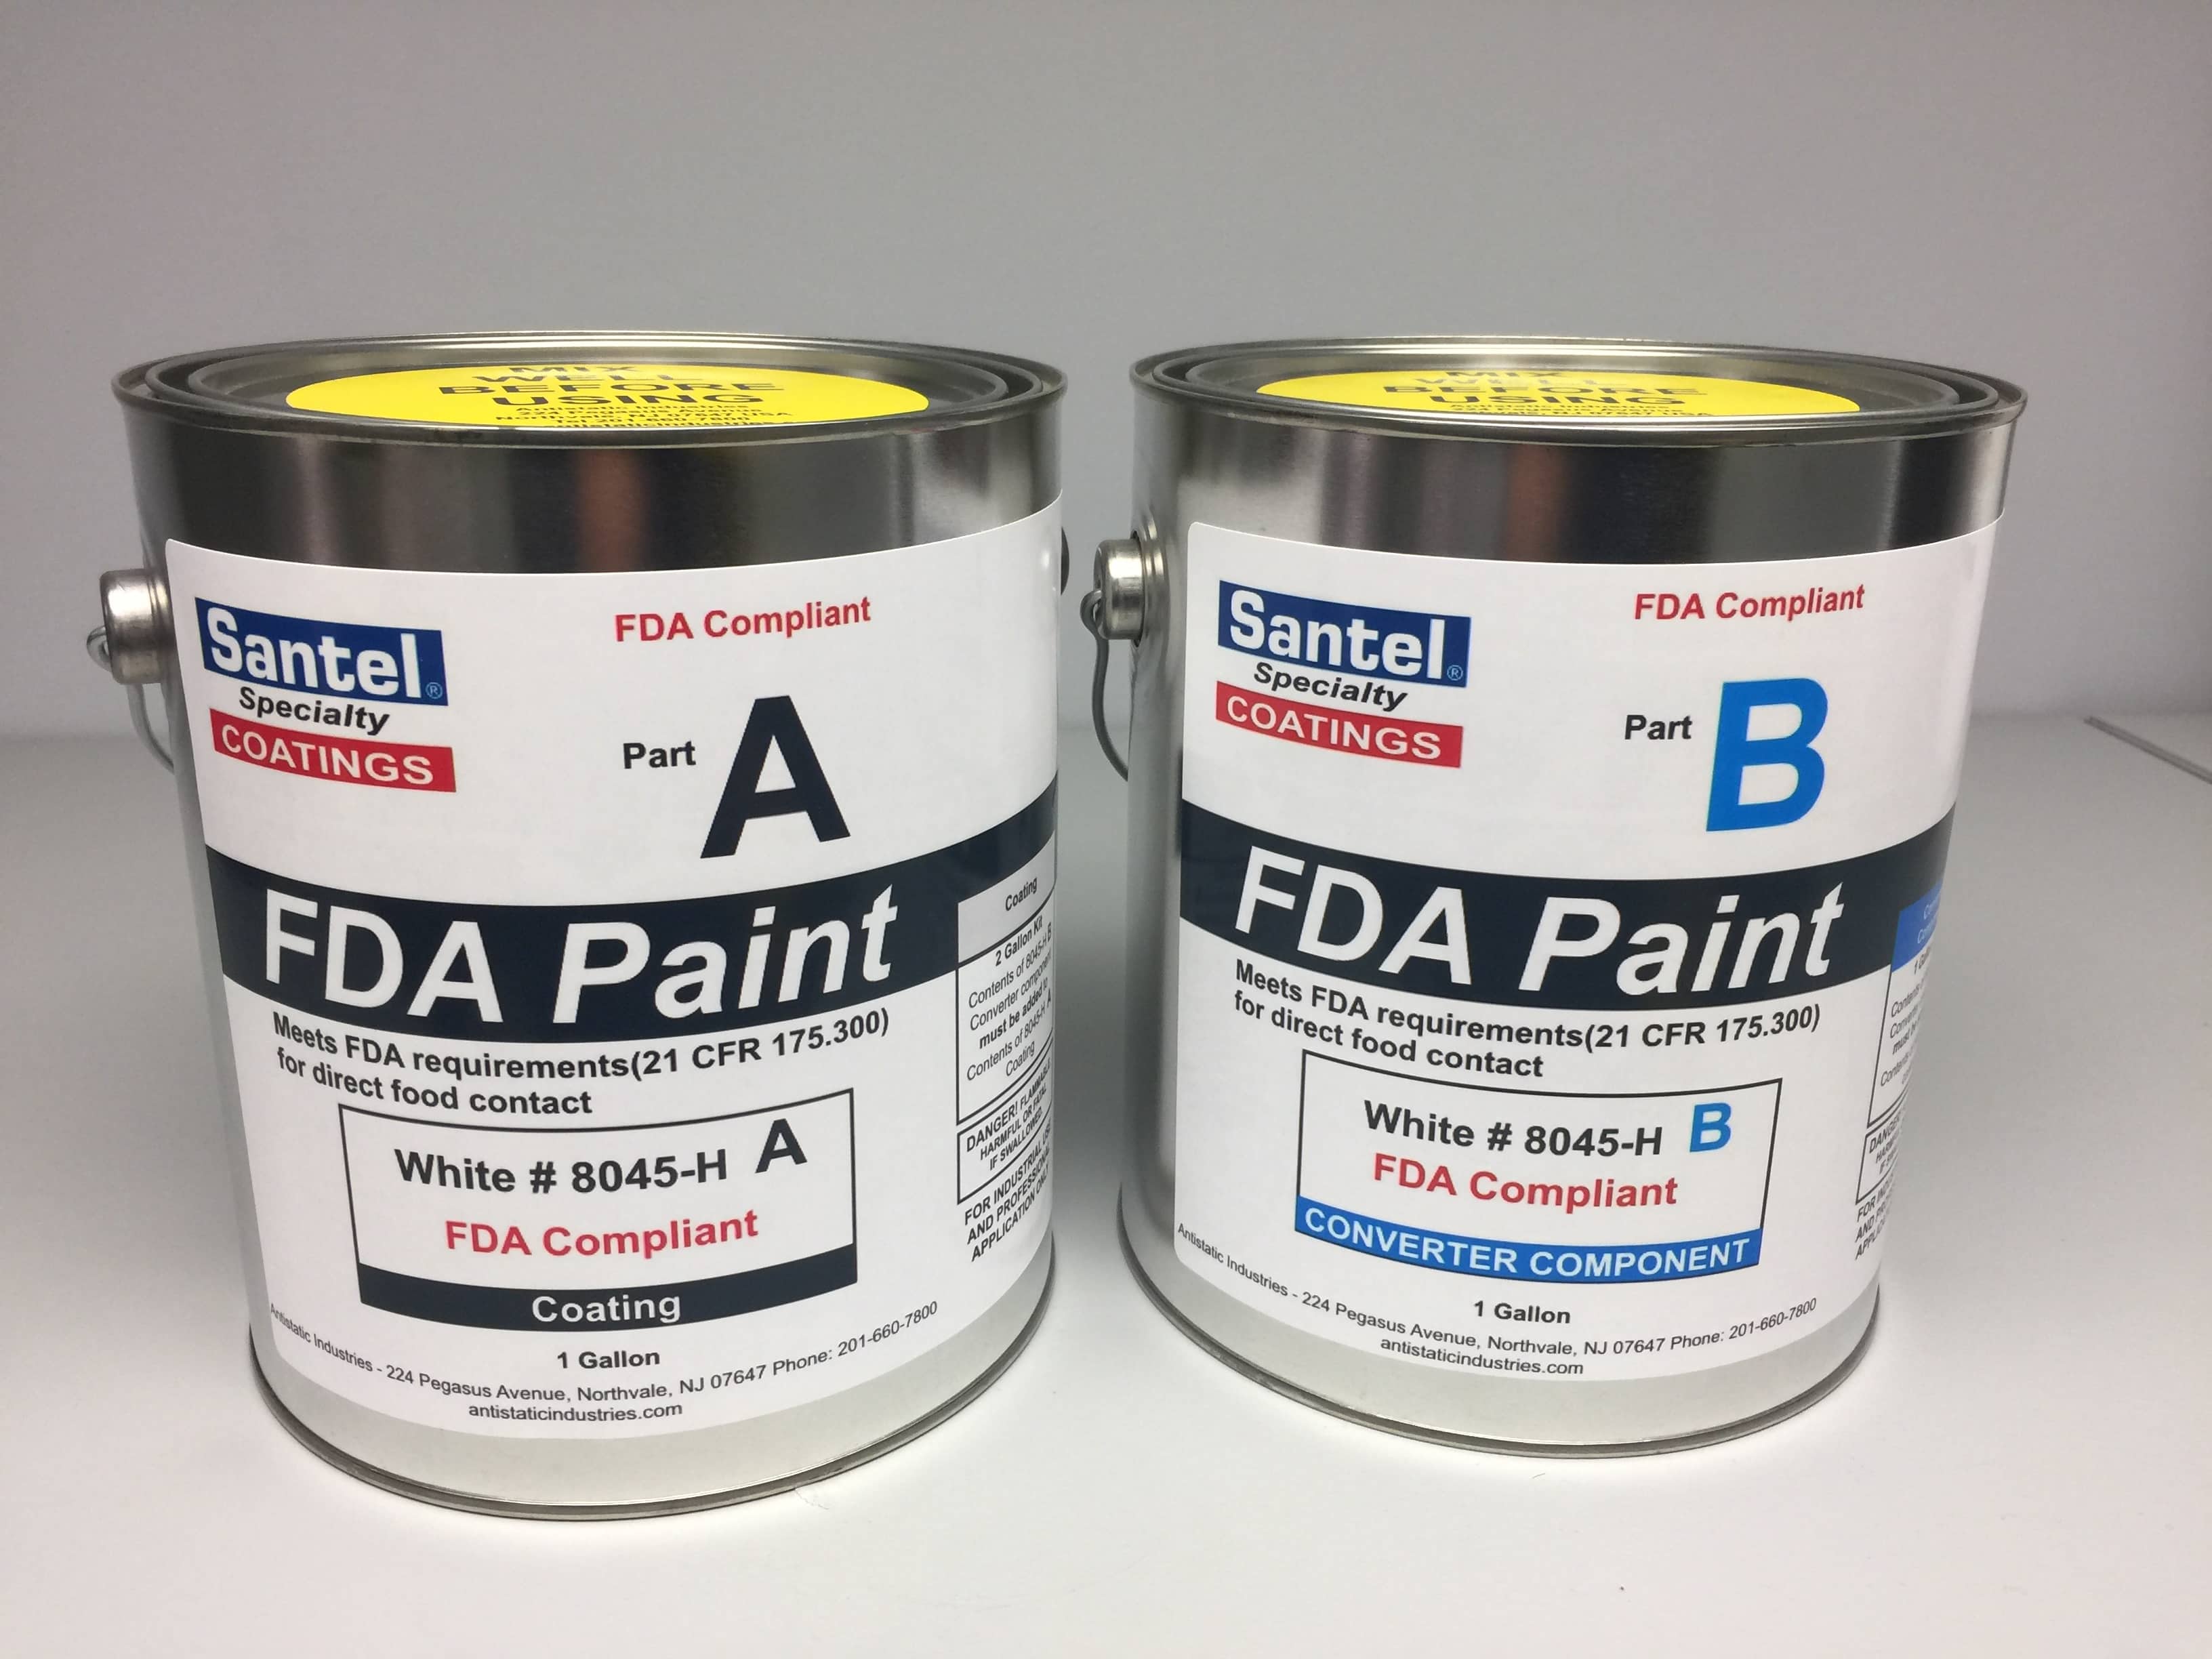 FDA Paint